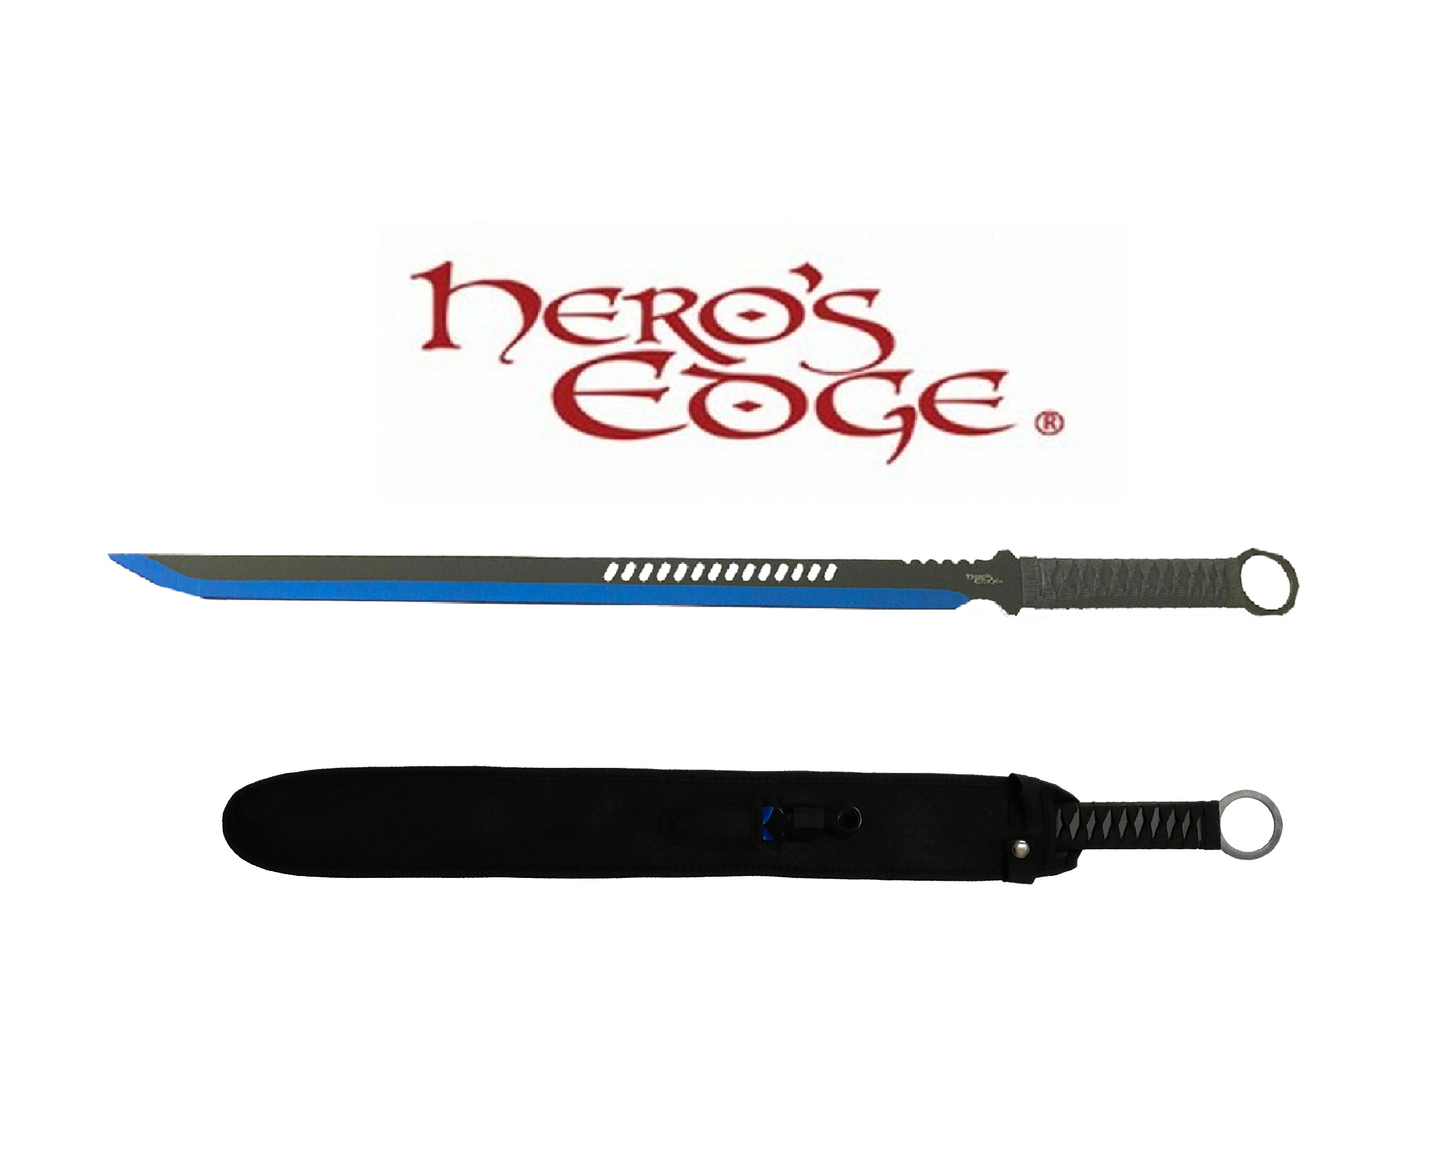 HERO'S EDGE TECHNICOLOR BLUE NINJA SWORD